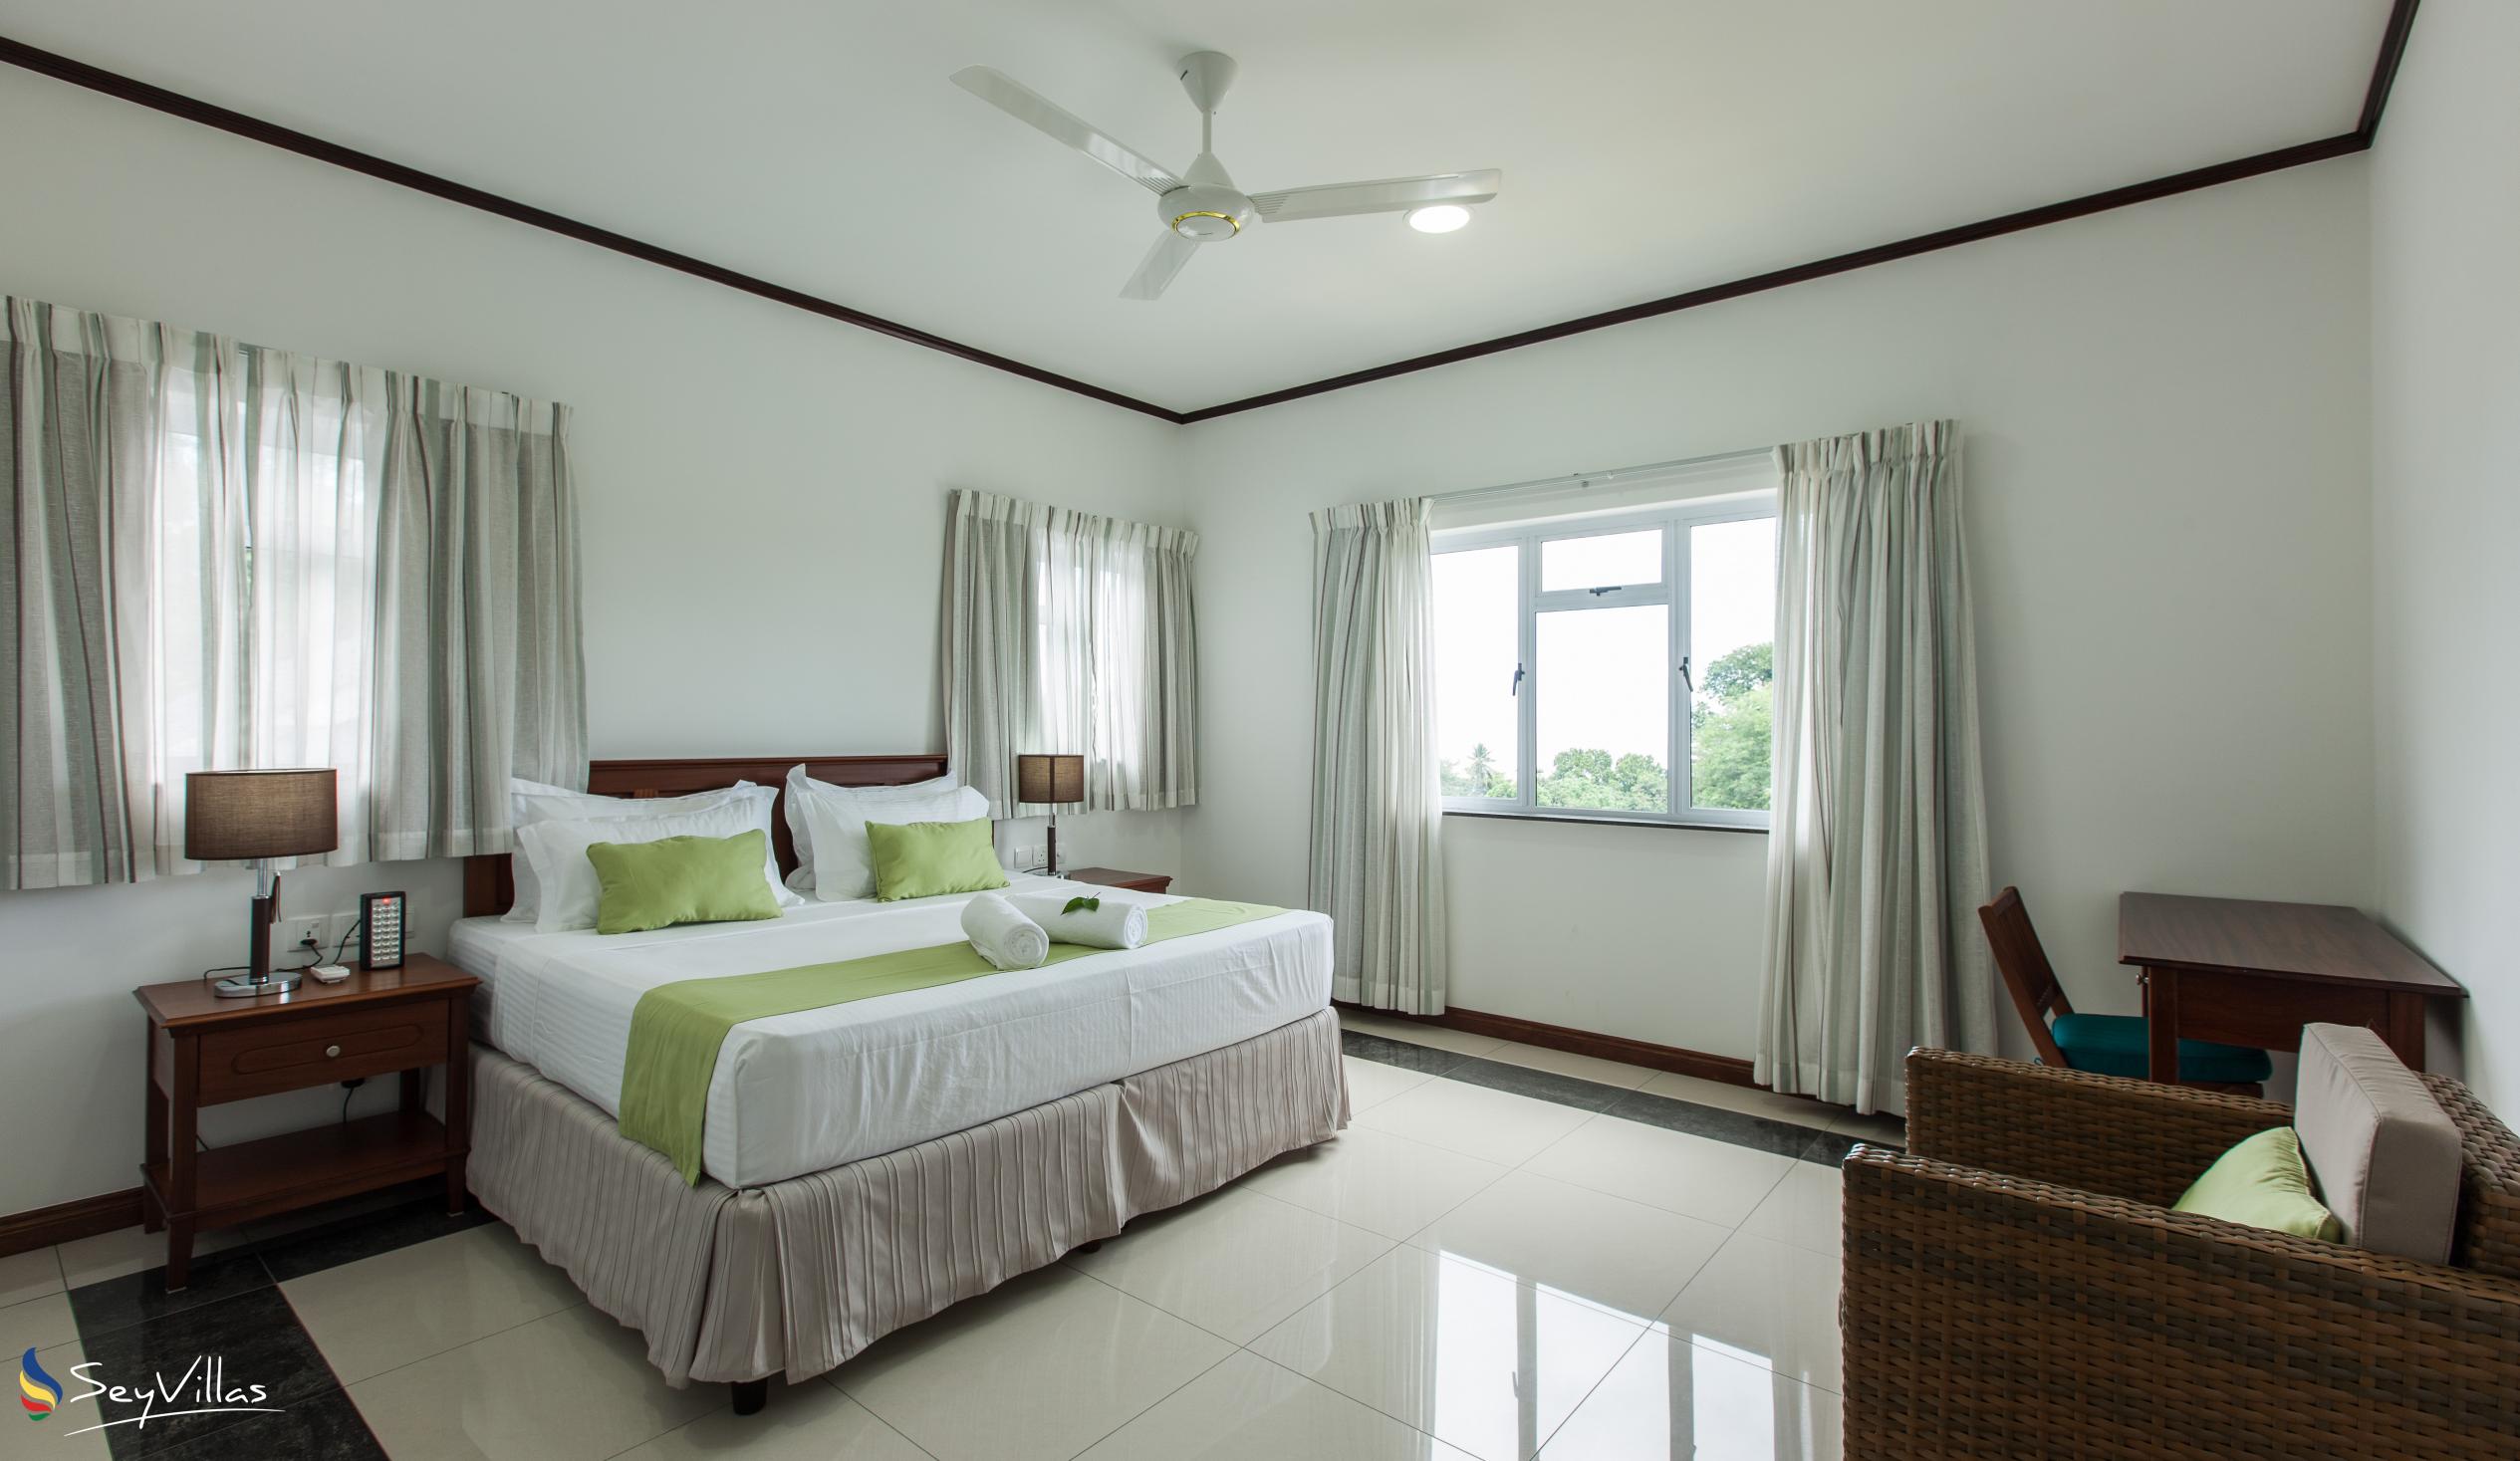 Foto 45: Bambous River Lodge - Appartement mit 2 Schlafzimmern - Mahé (Seychellen)